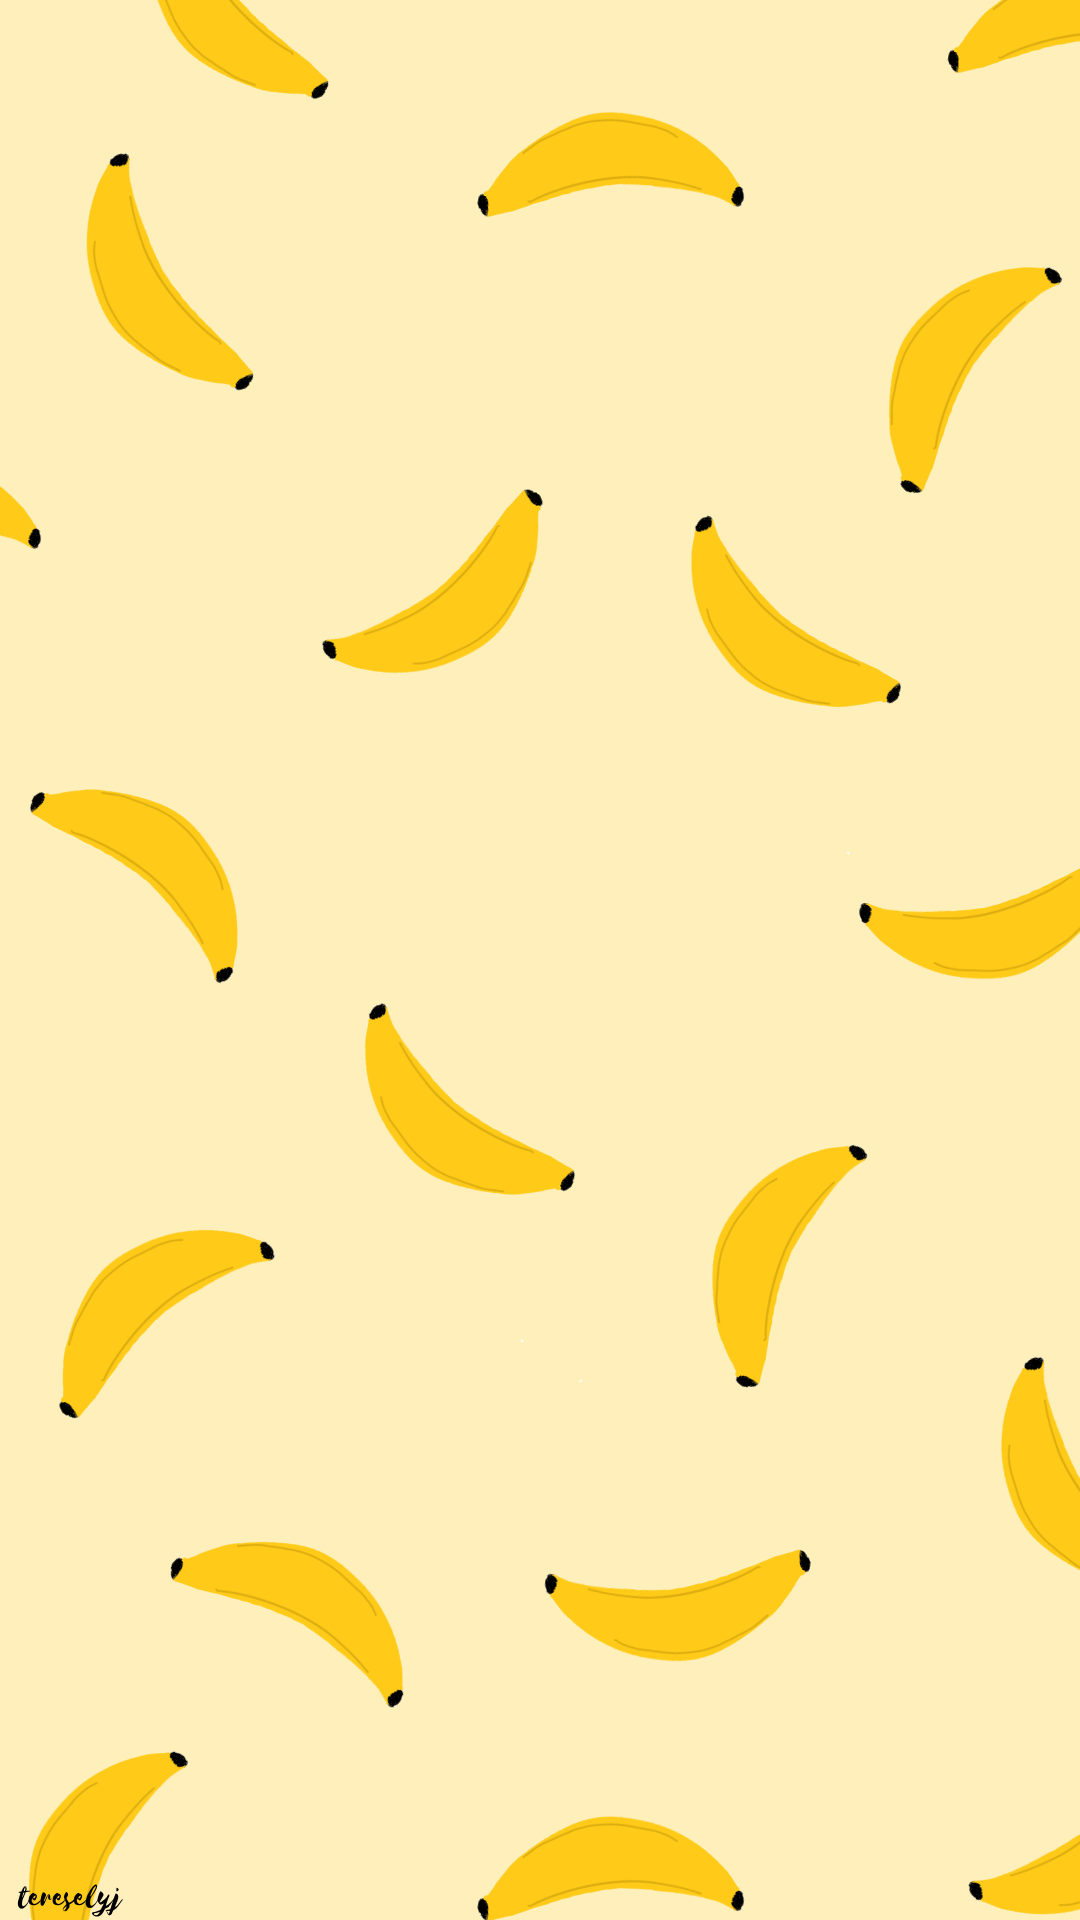 A banana pattern on a yellow background - Banana